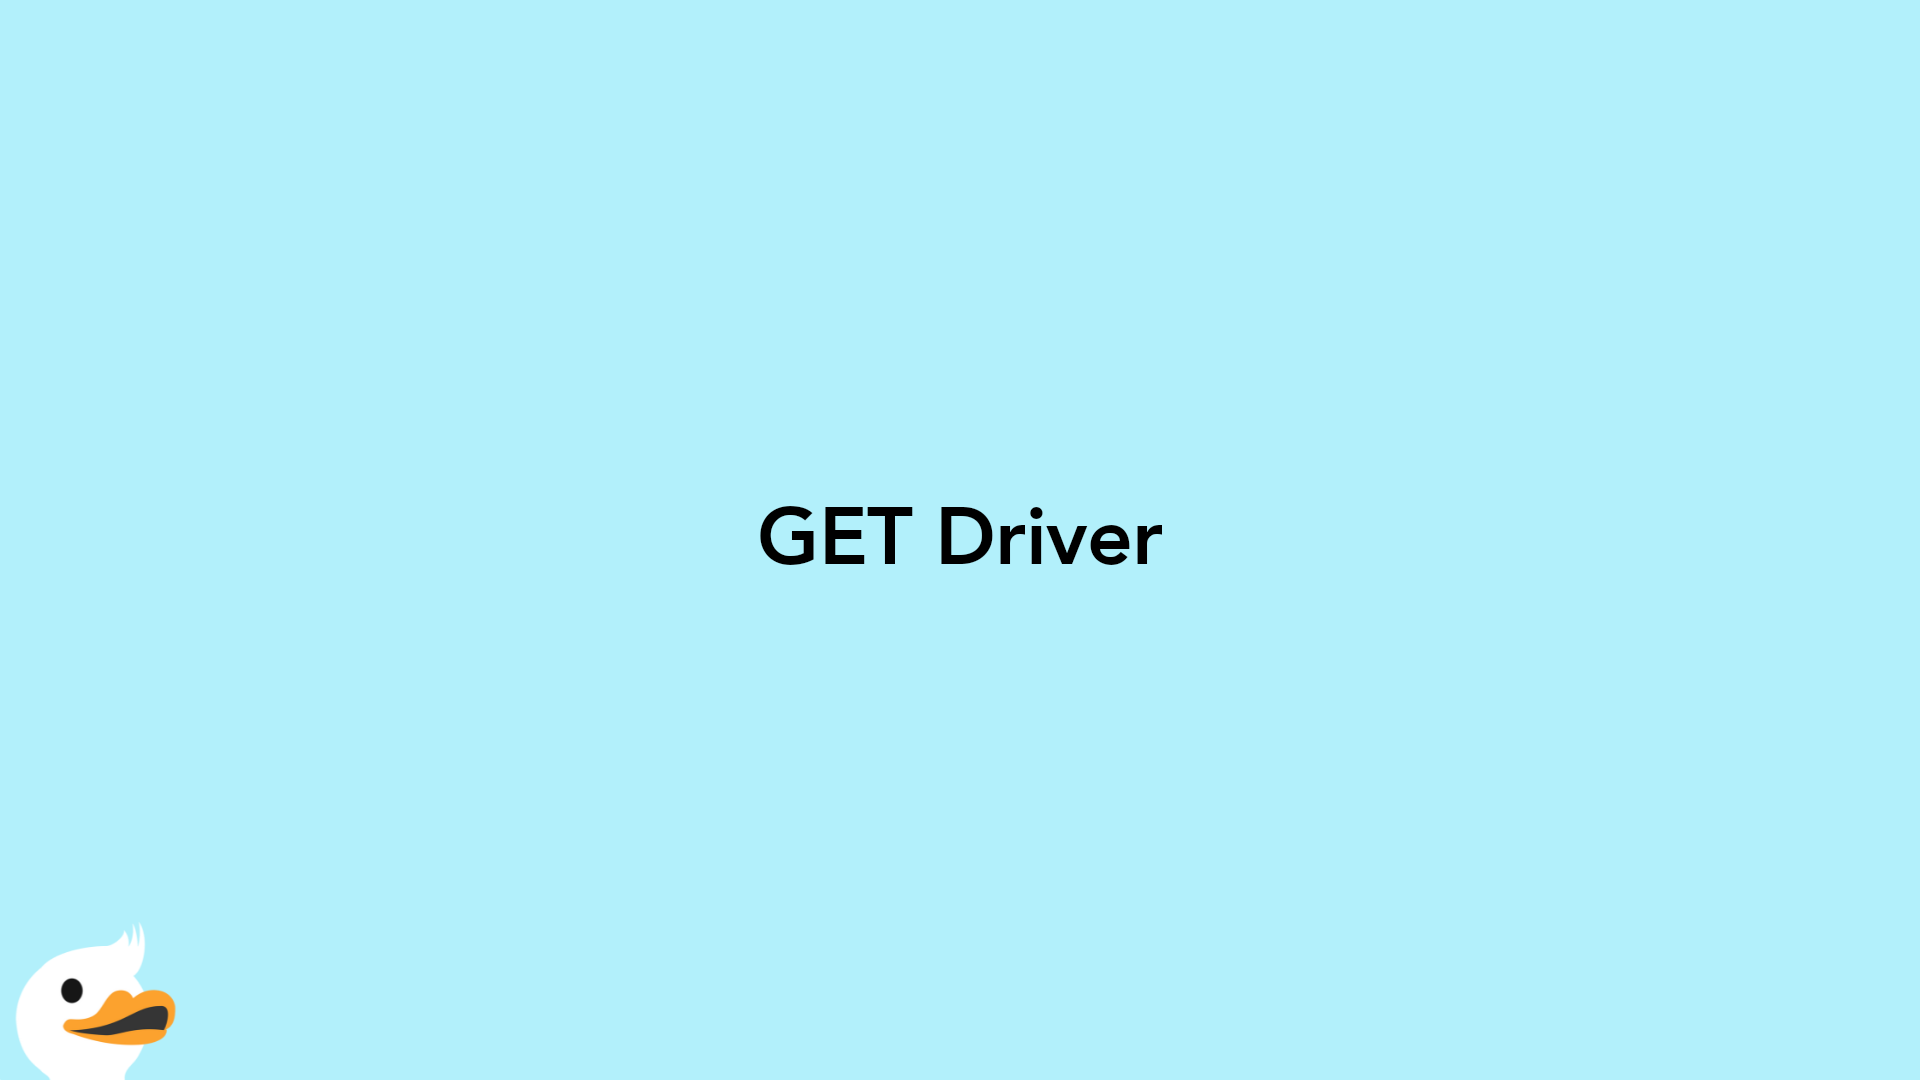 GET Driver